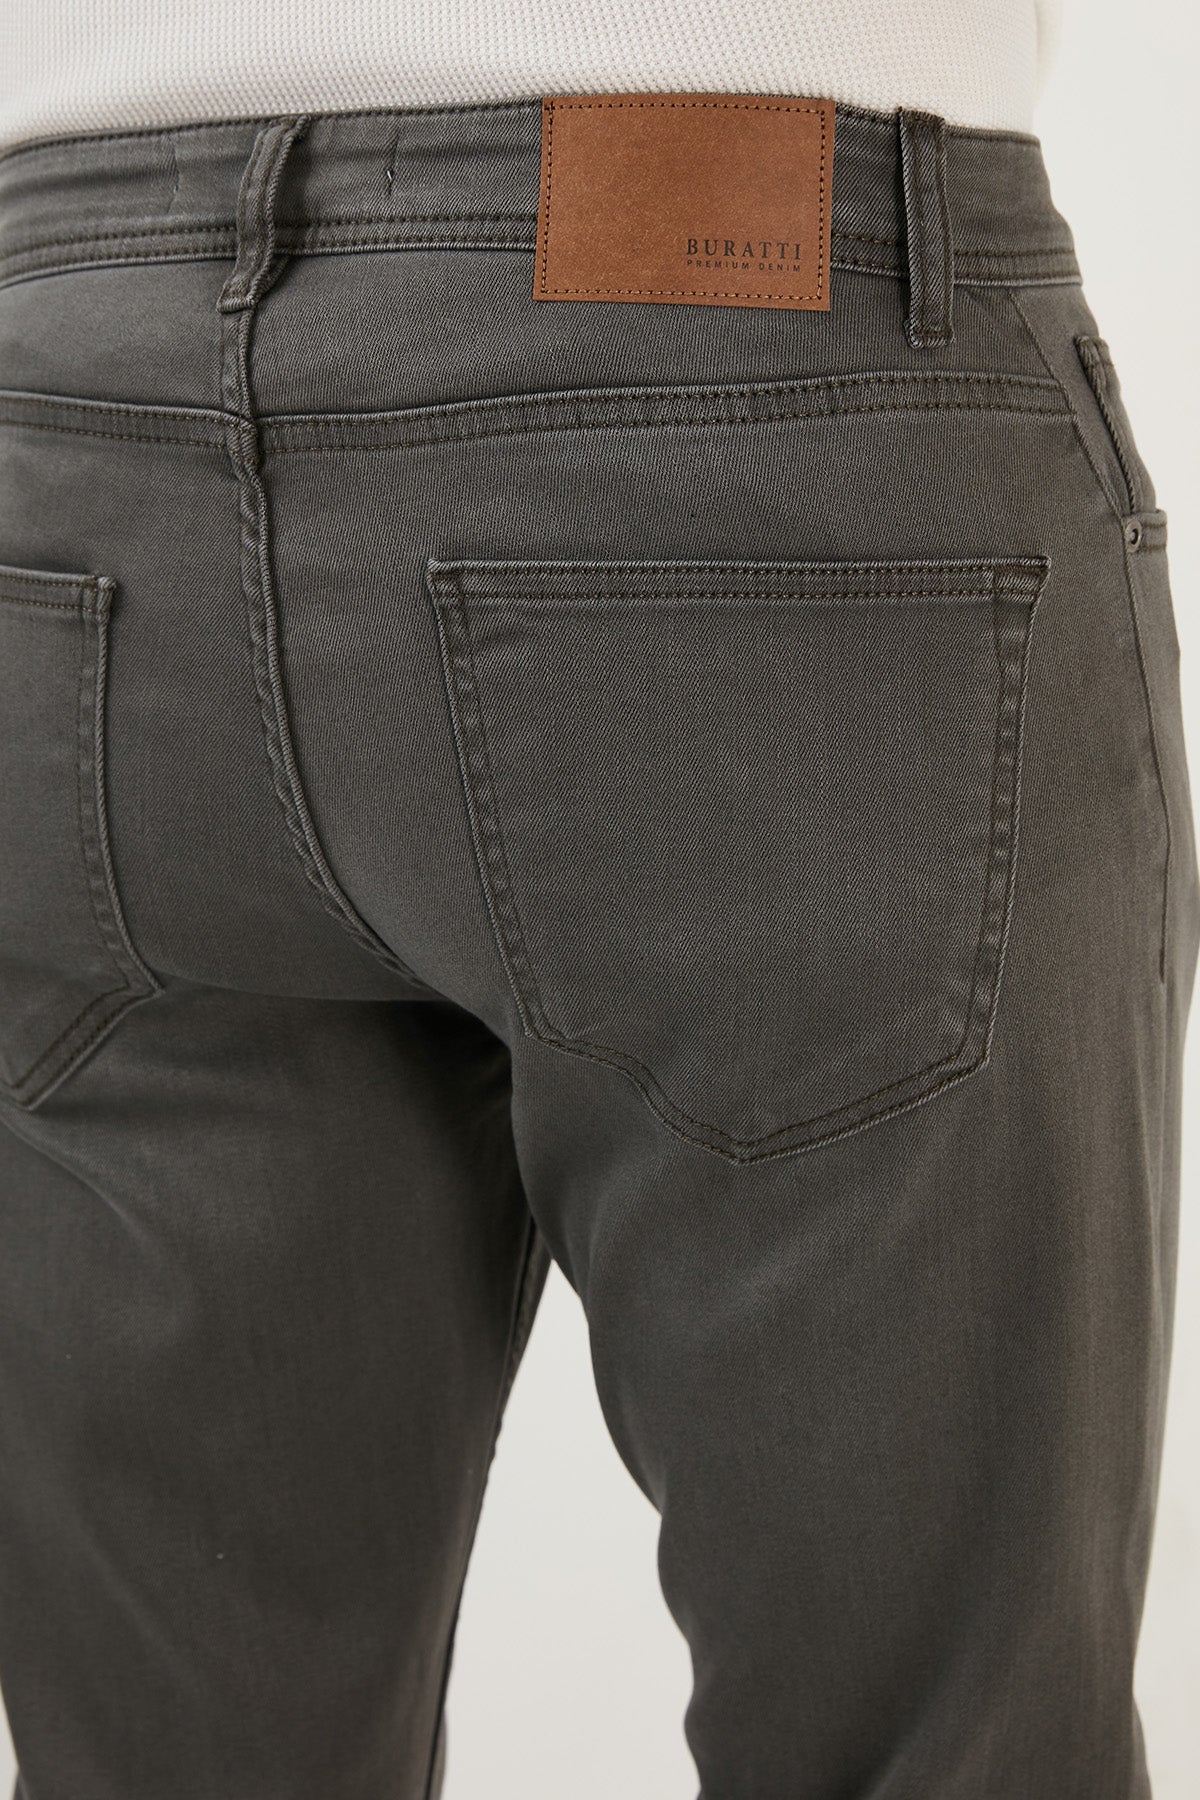 Buratti Cotton Normal Waist Regular Fit Piggy Leg Jeans Men Denim Trousers